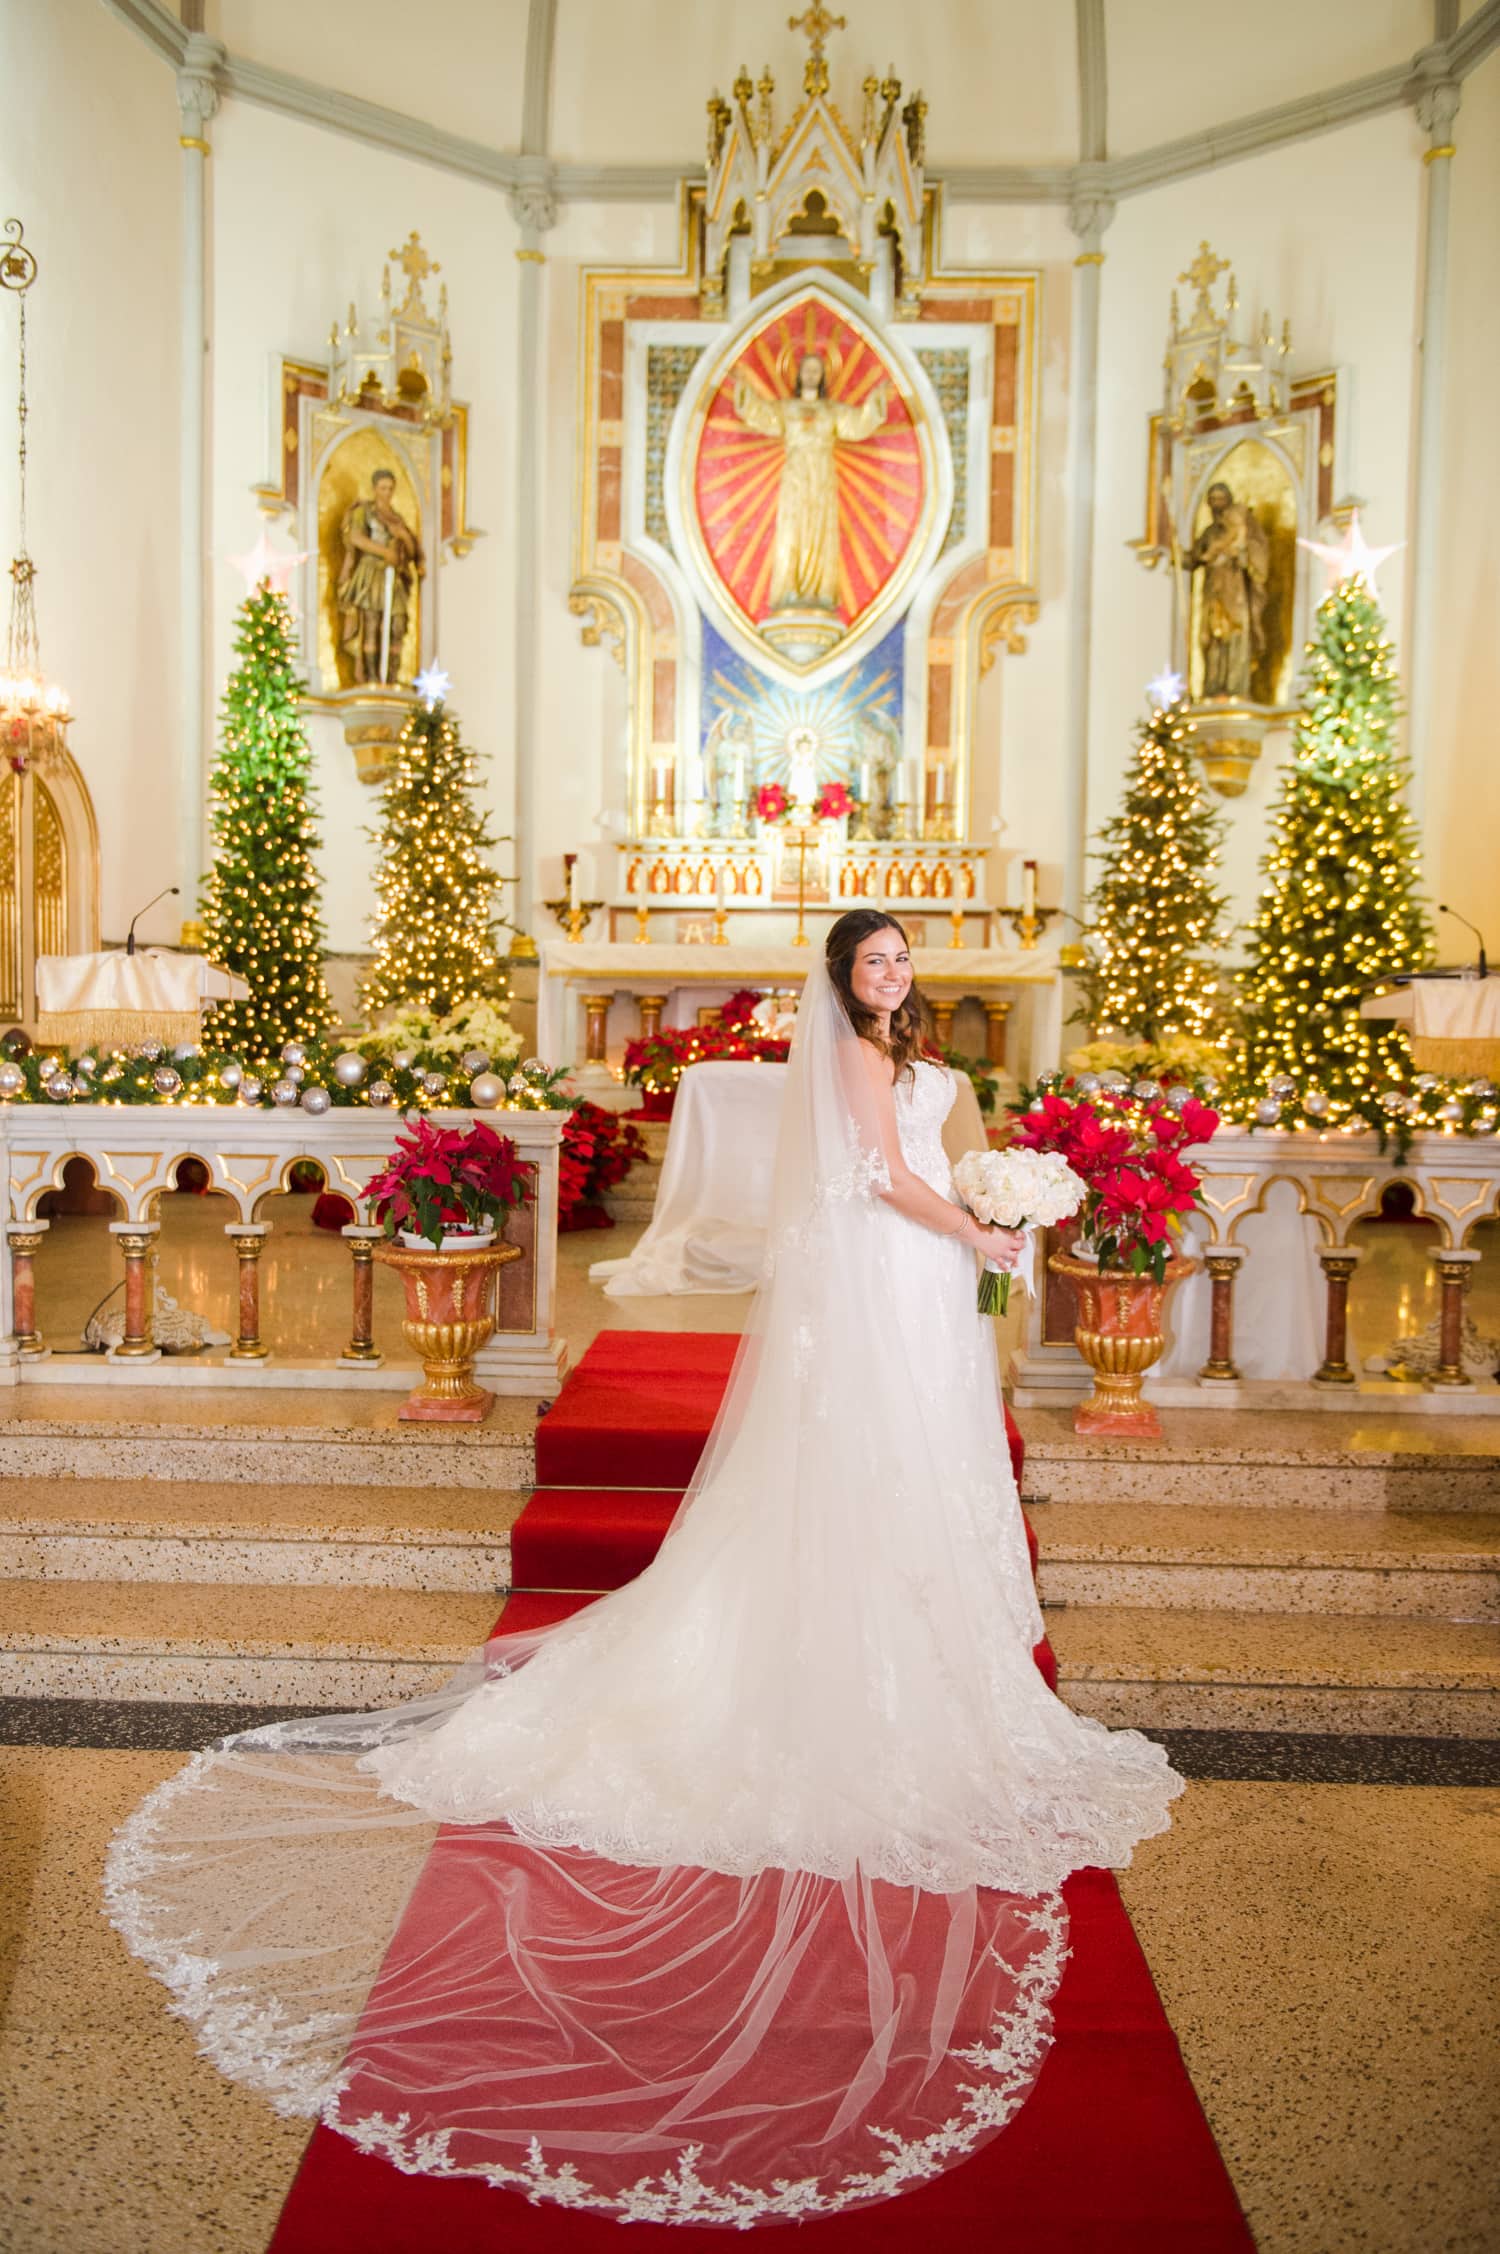 Destination wedding at Parroquia San Jorge in Santurce, by Puerto Rico photographer Camille Fontz